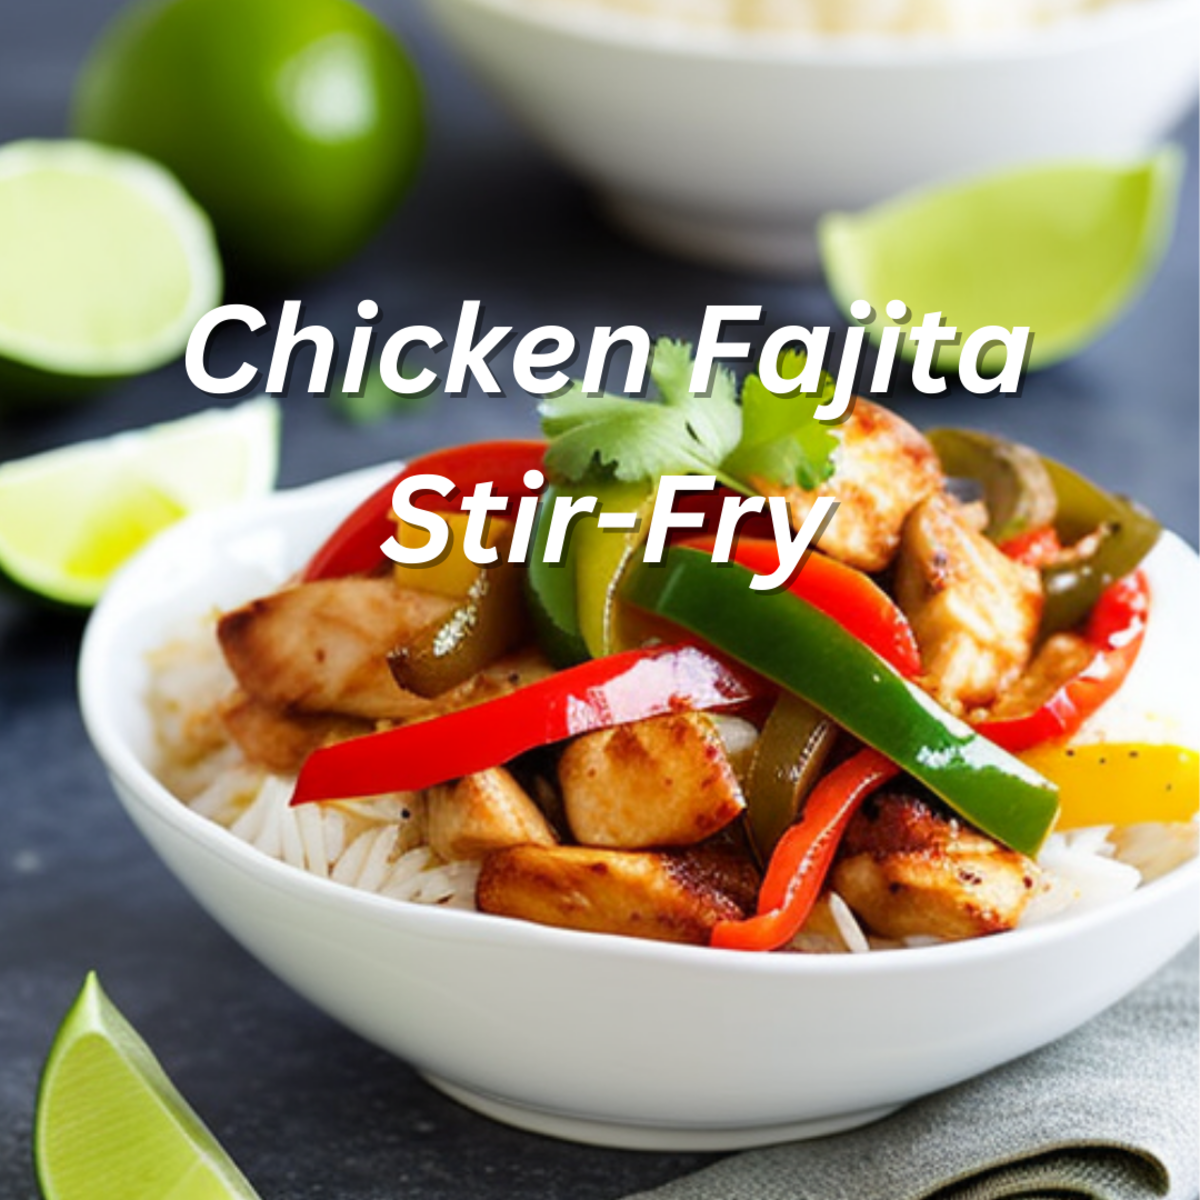 Chicken Fajita Stir-Fry